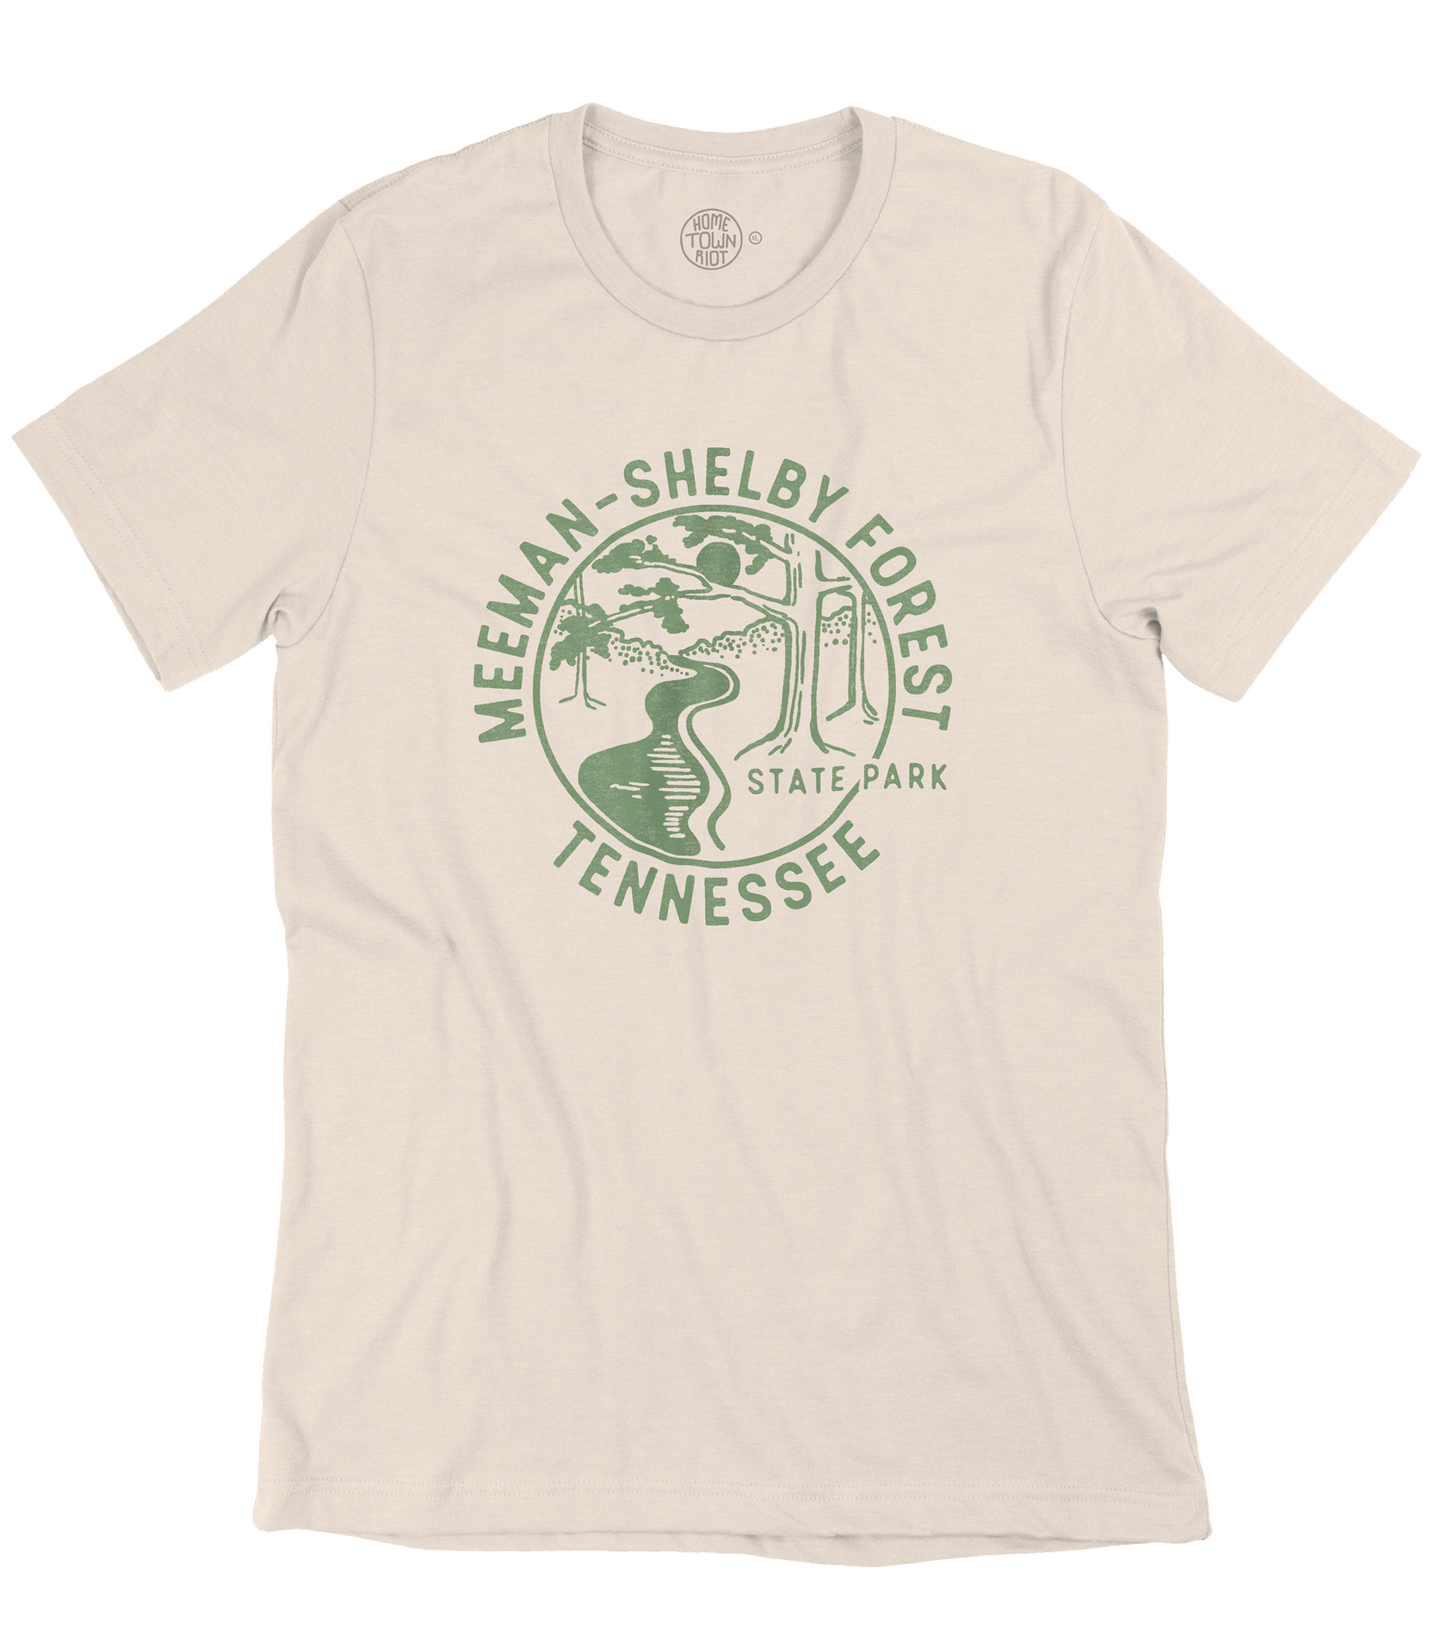 Meeman-Shelby Forest State Park Shirt - HomeTownRiot